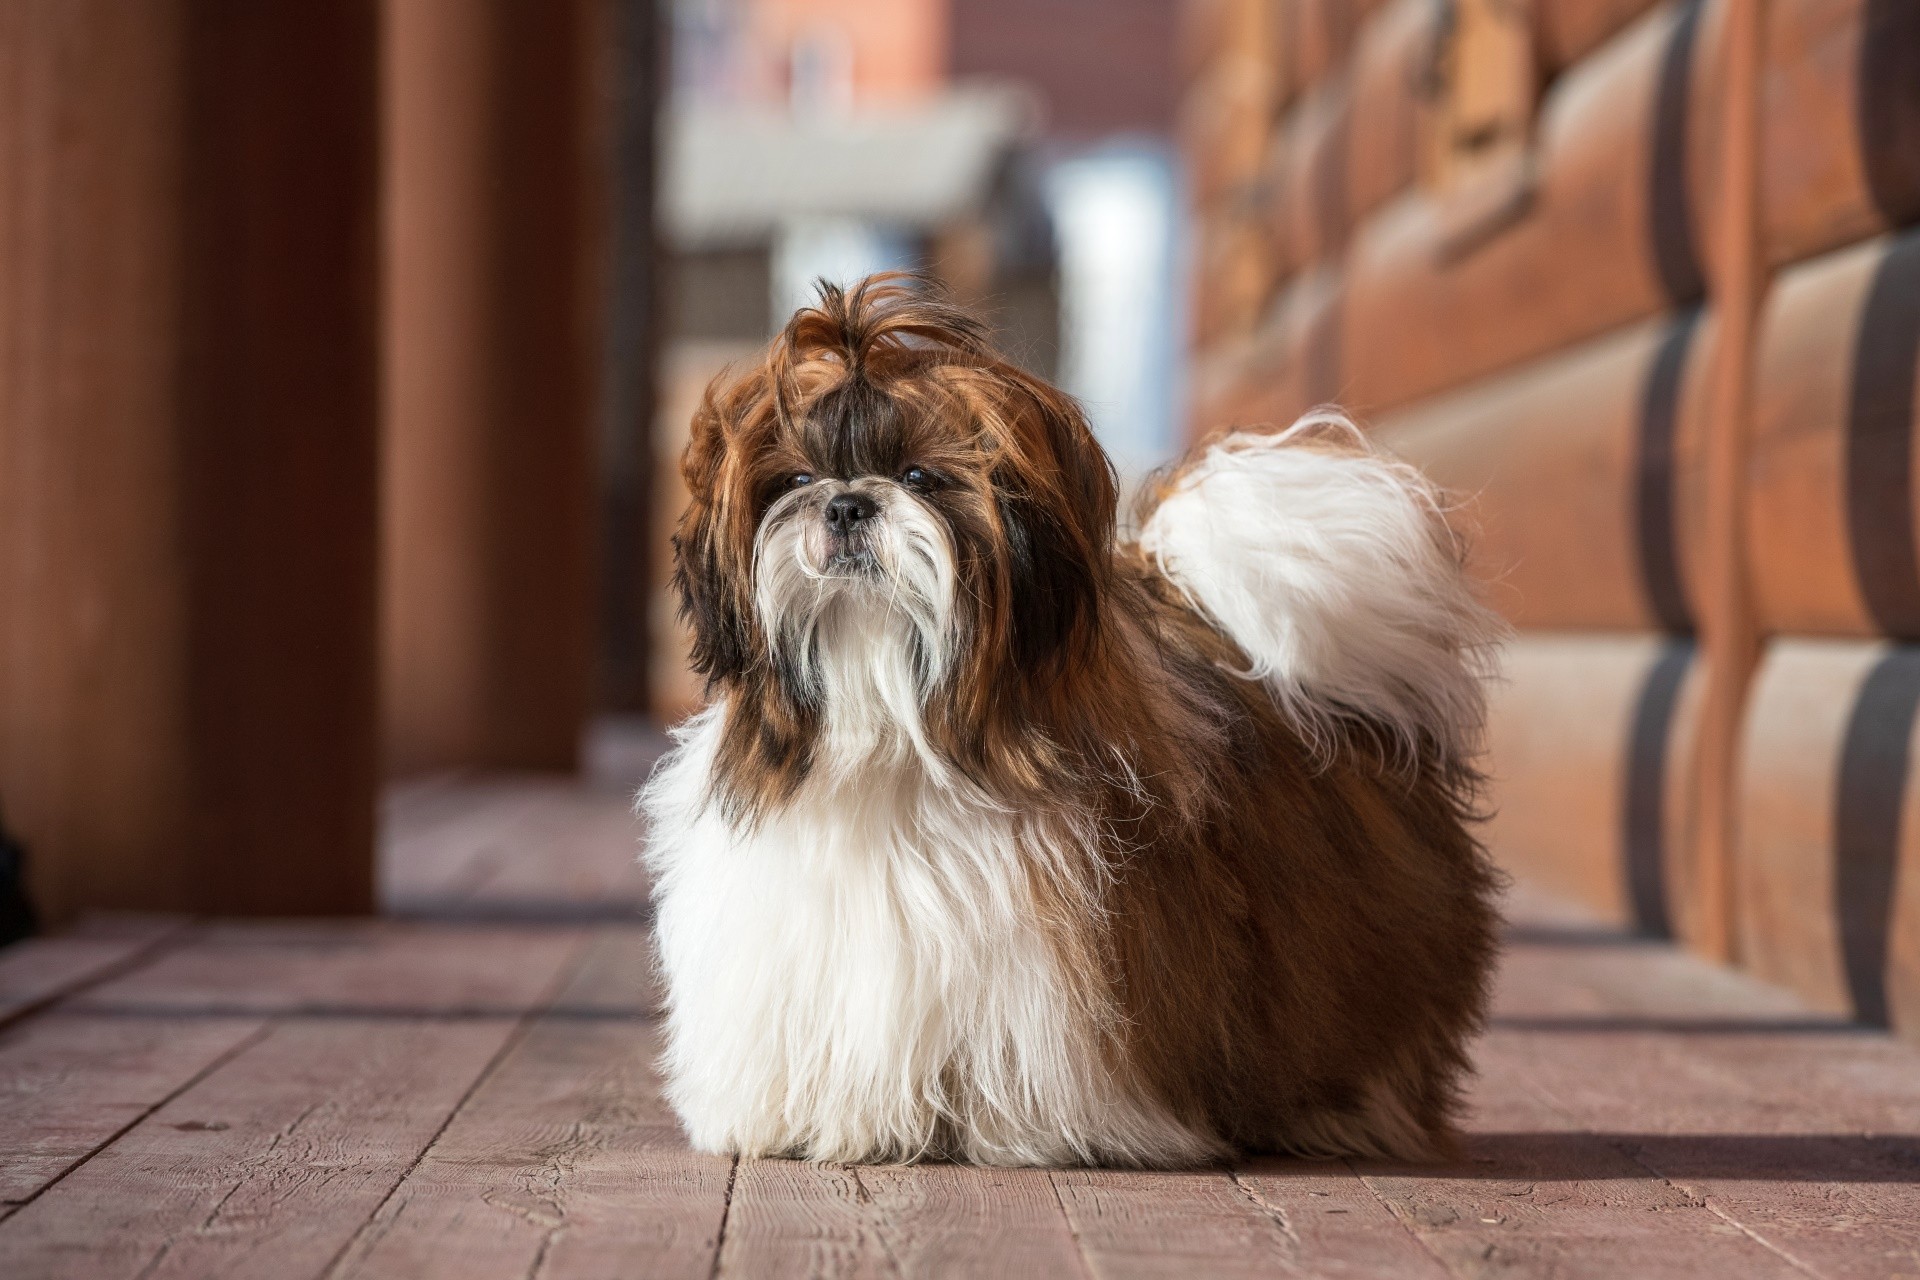 Shih Tzu dog with long groomed hair